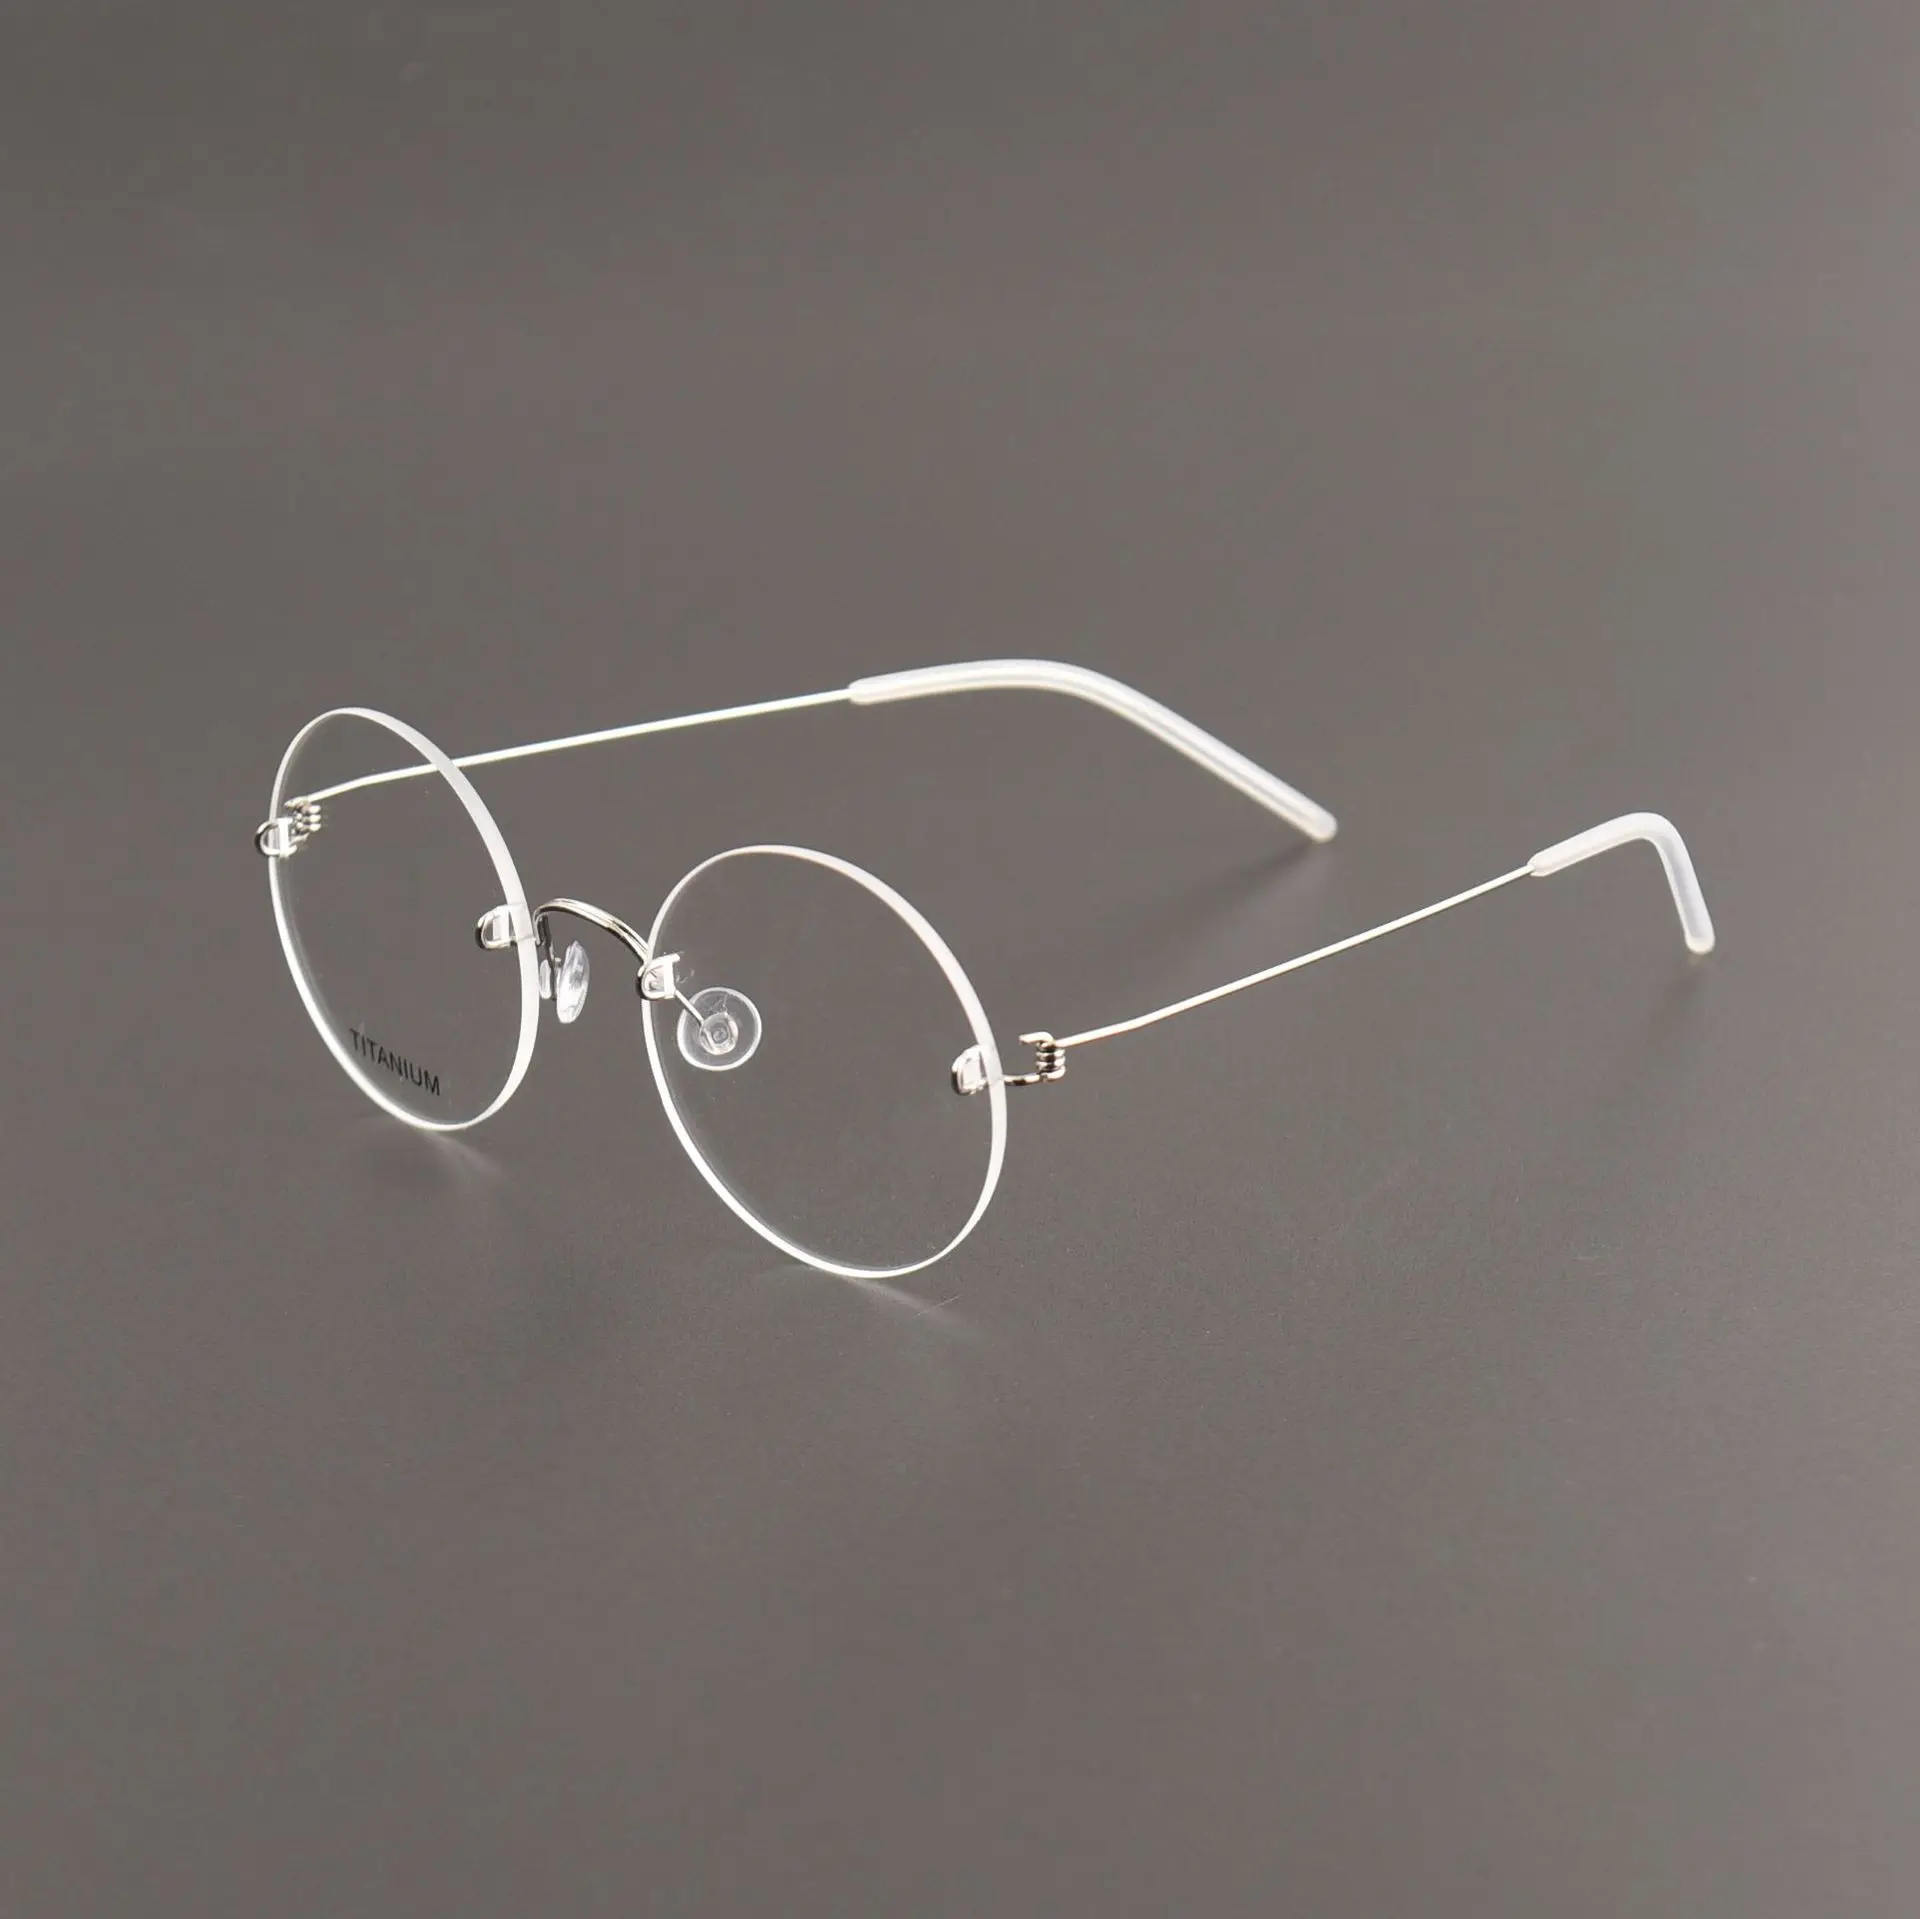 Titanium Rimless Glasses Men Women Vintage Round Eyeglasses Frame Optical Myopia Prescription Spectacles Frames Eyewear